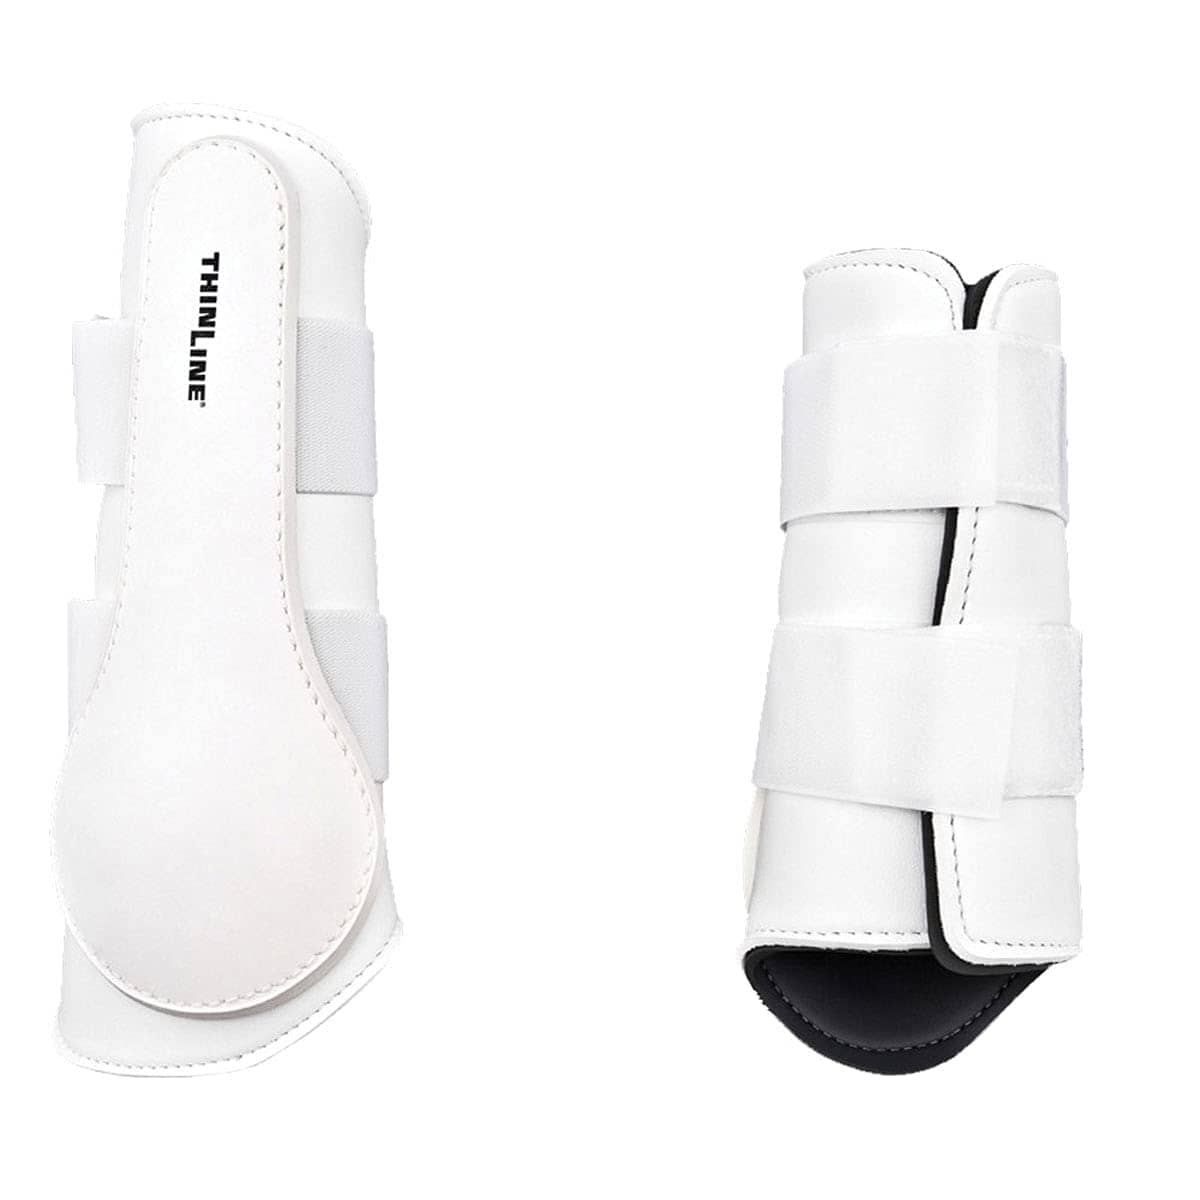 ThinLine Sport Hind Boots - White, Medium - One Stop Equine